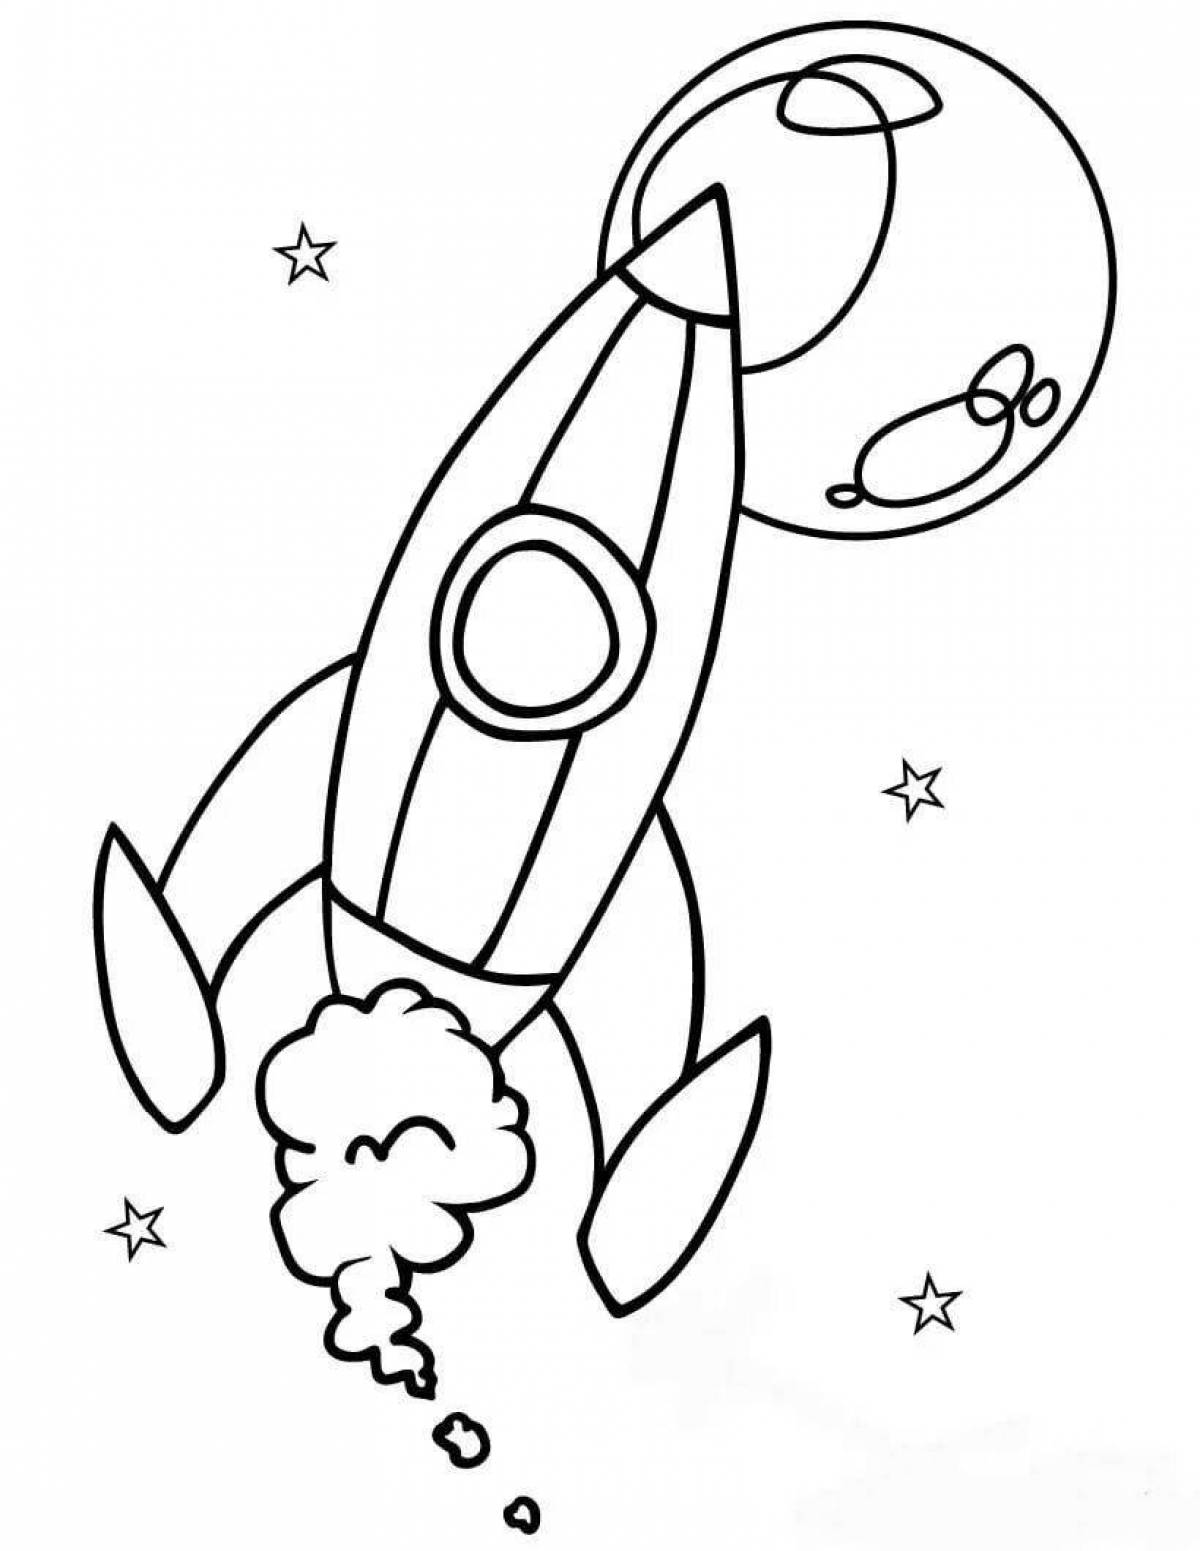 Fabulous rockets in space for kids